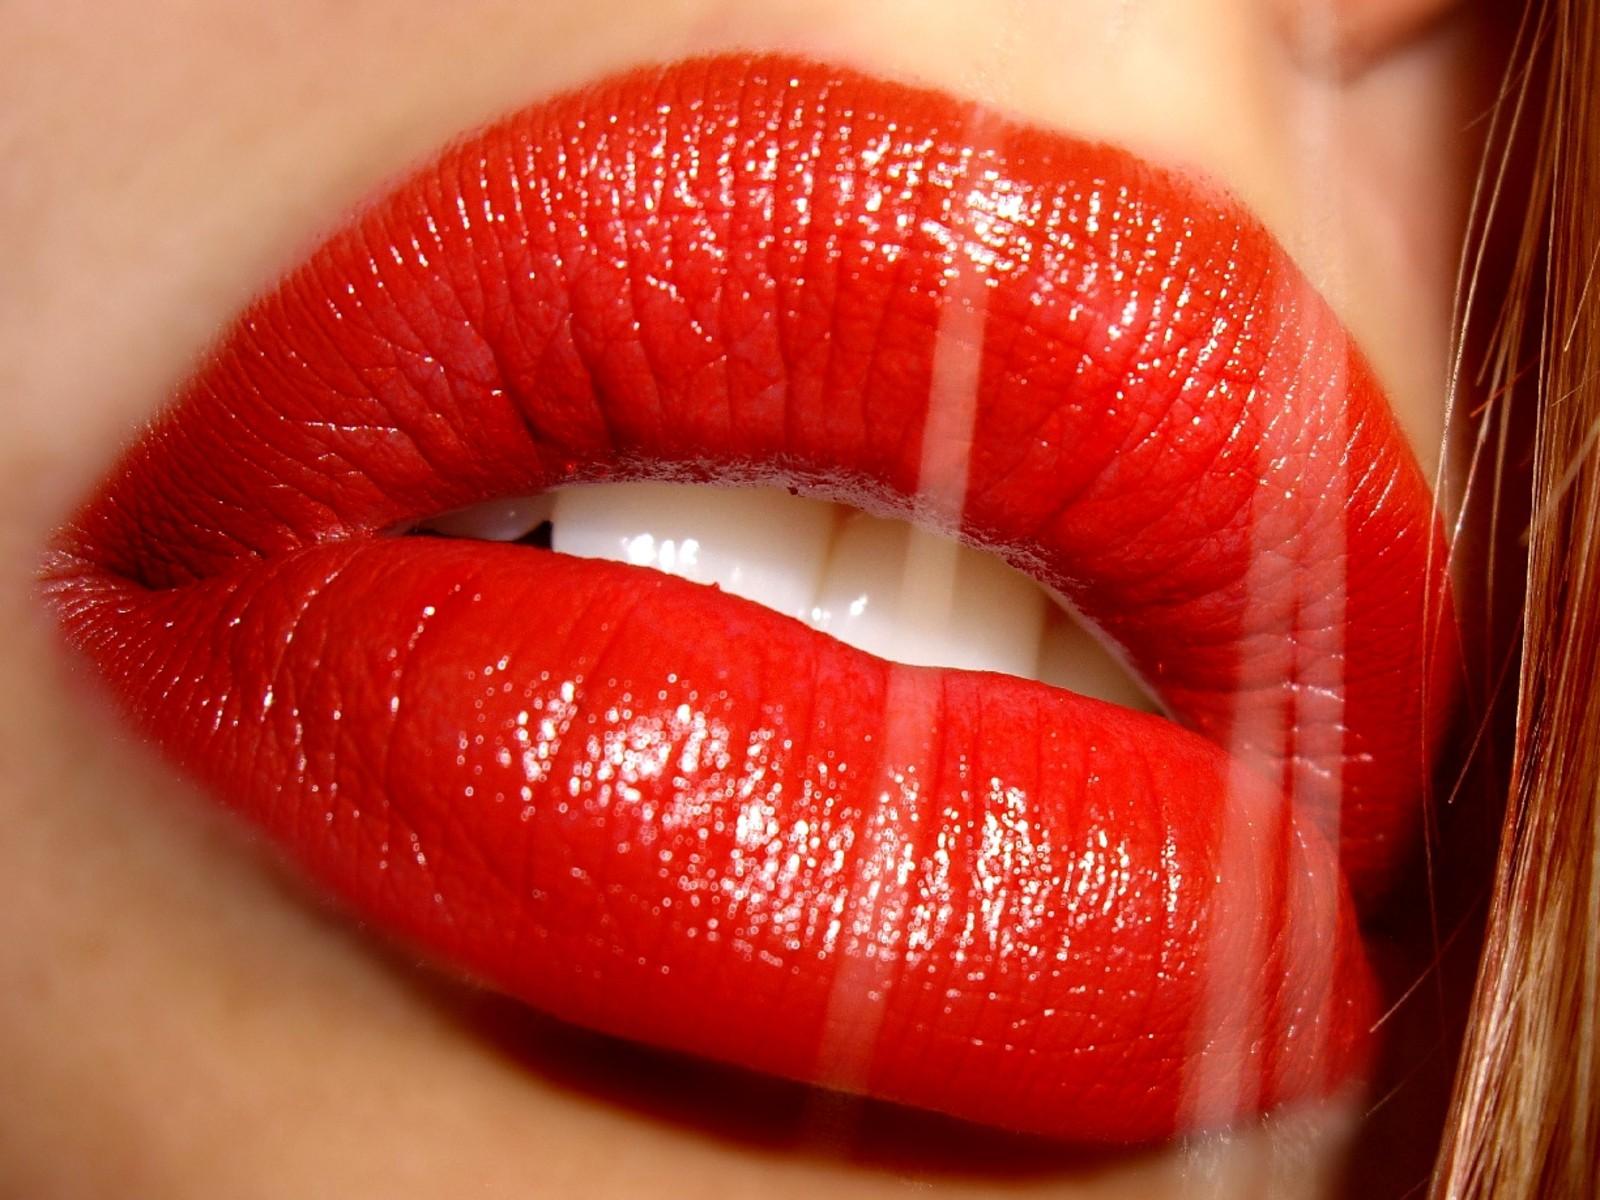 adriana lima close up lips mouth red teeth best deskx1200 HD